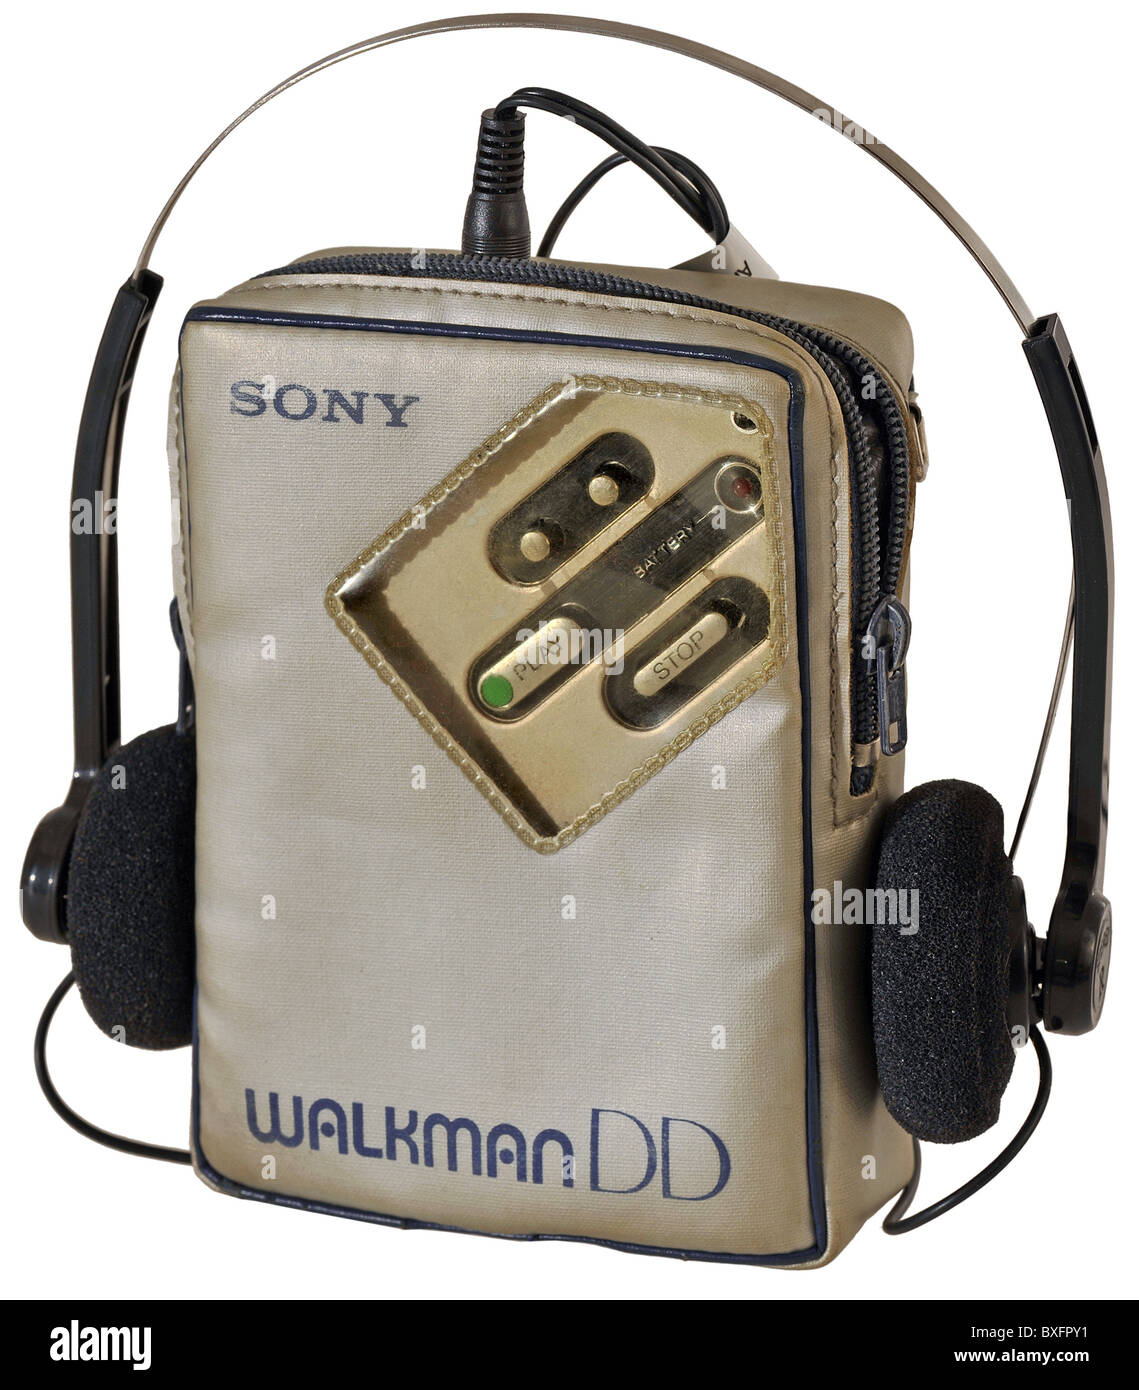 22 Sony Sports Walkman Images, Stock Photos, 3D objects, & Vectors